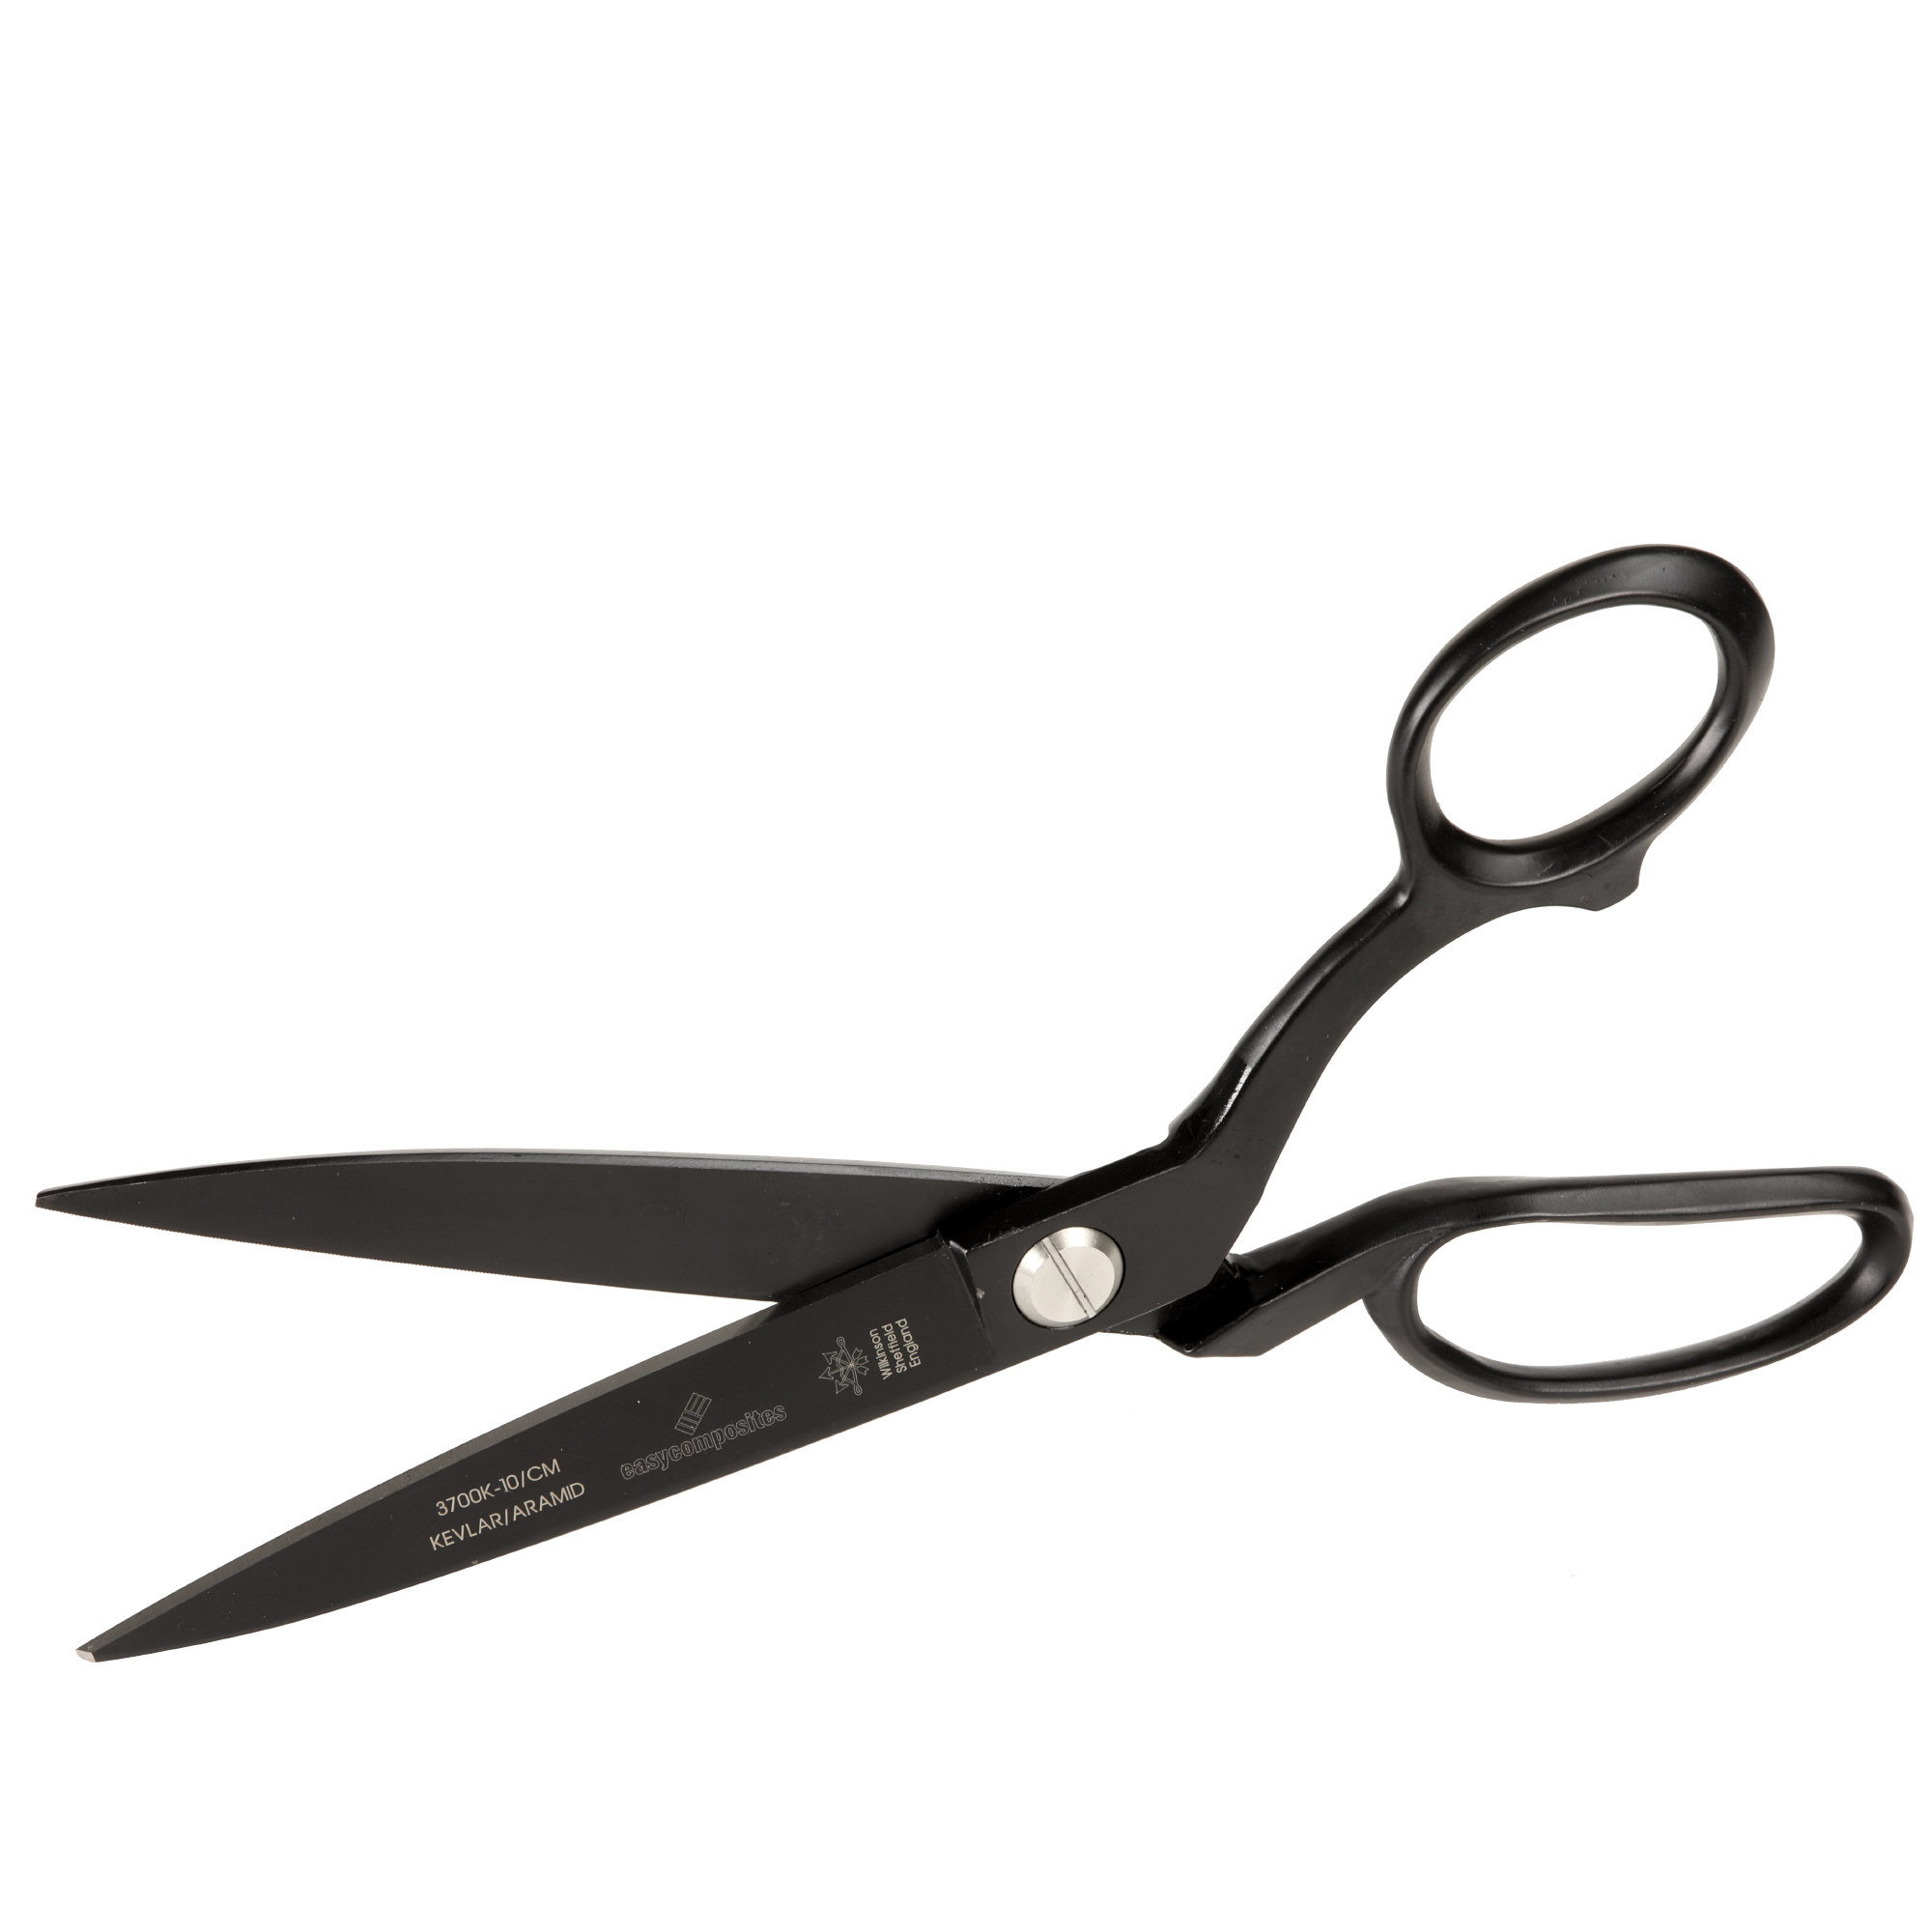 10 inch Bent Shear Scissors PTFE Coated Heavy Duty, from AJC Hatchet